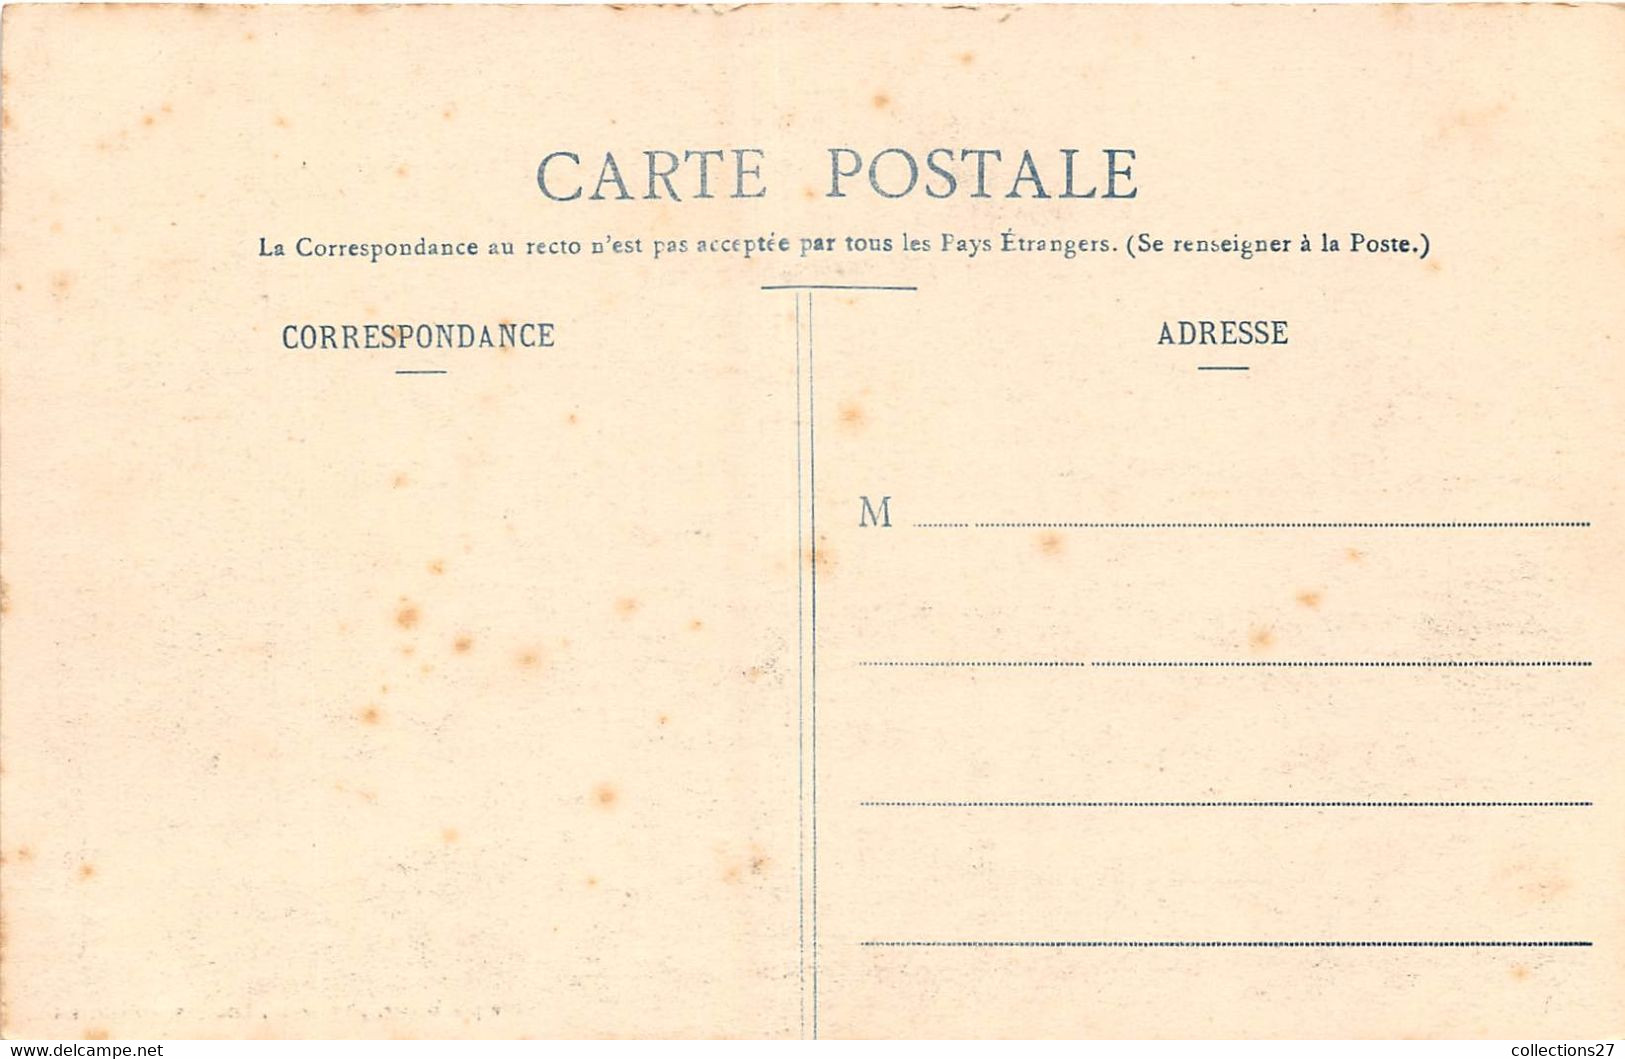 87-LIMOGES-GREVES DU 15 AVRIL 1905, BARRICADE ANCIENNE ROUTE D'AIXE - Limoges